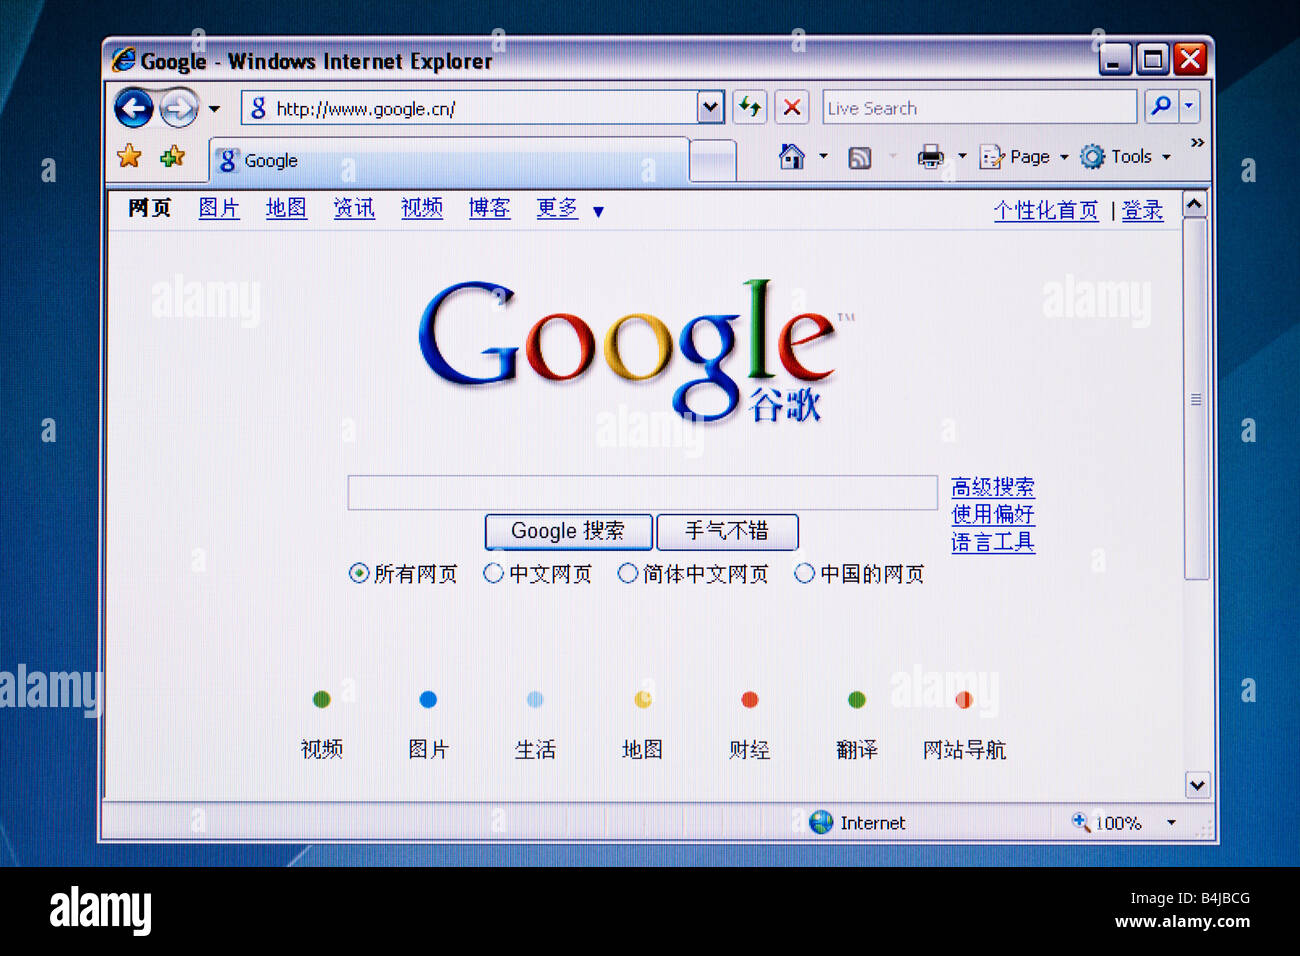 Google China website screen and logo full length Stock Photo